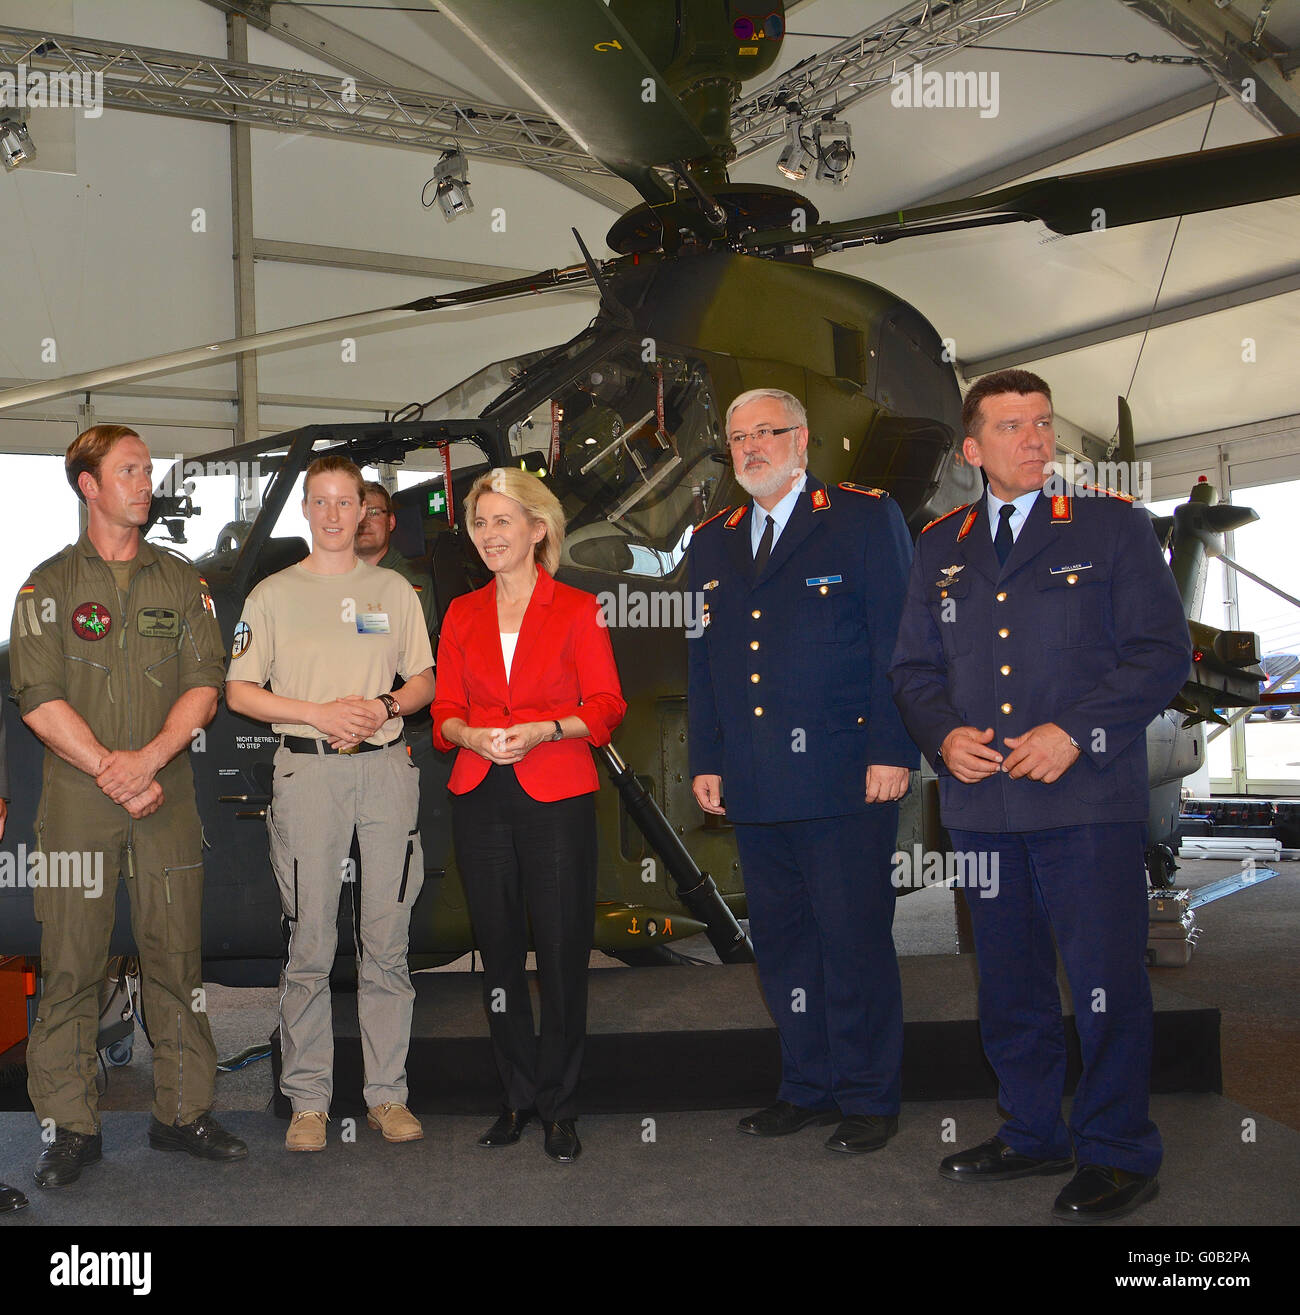 Minister of defence von der Leyen  with soldiers Stock Photo